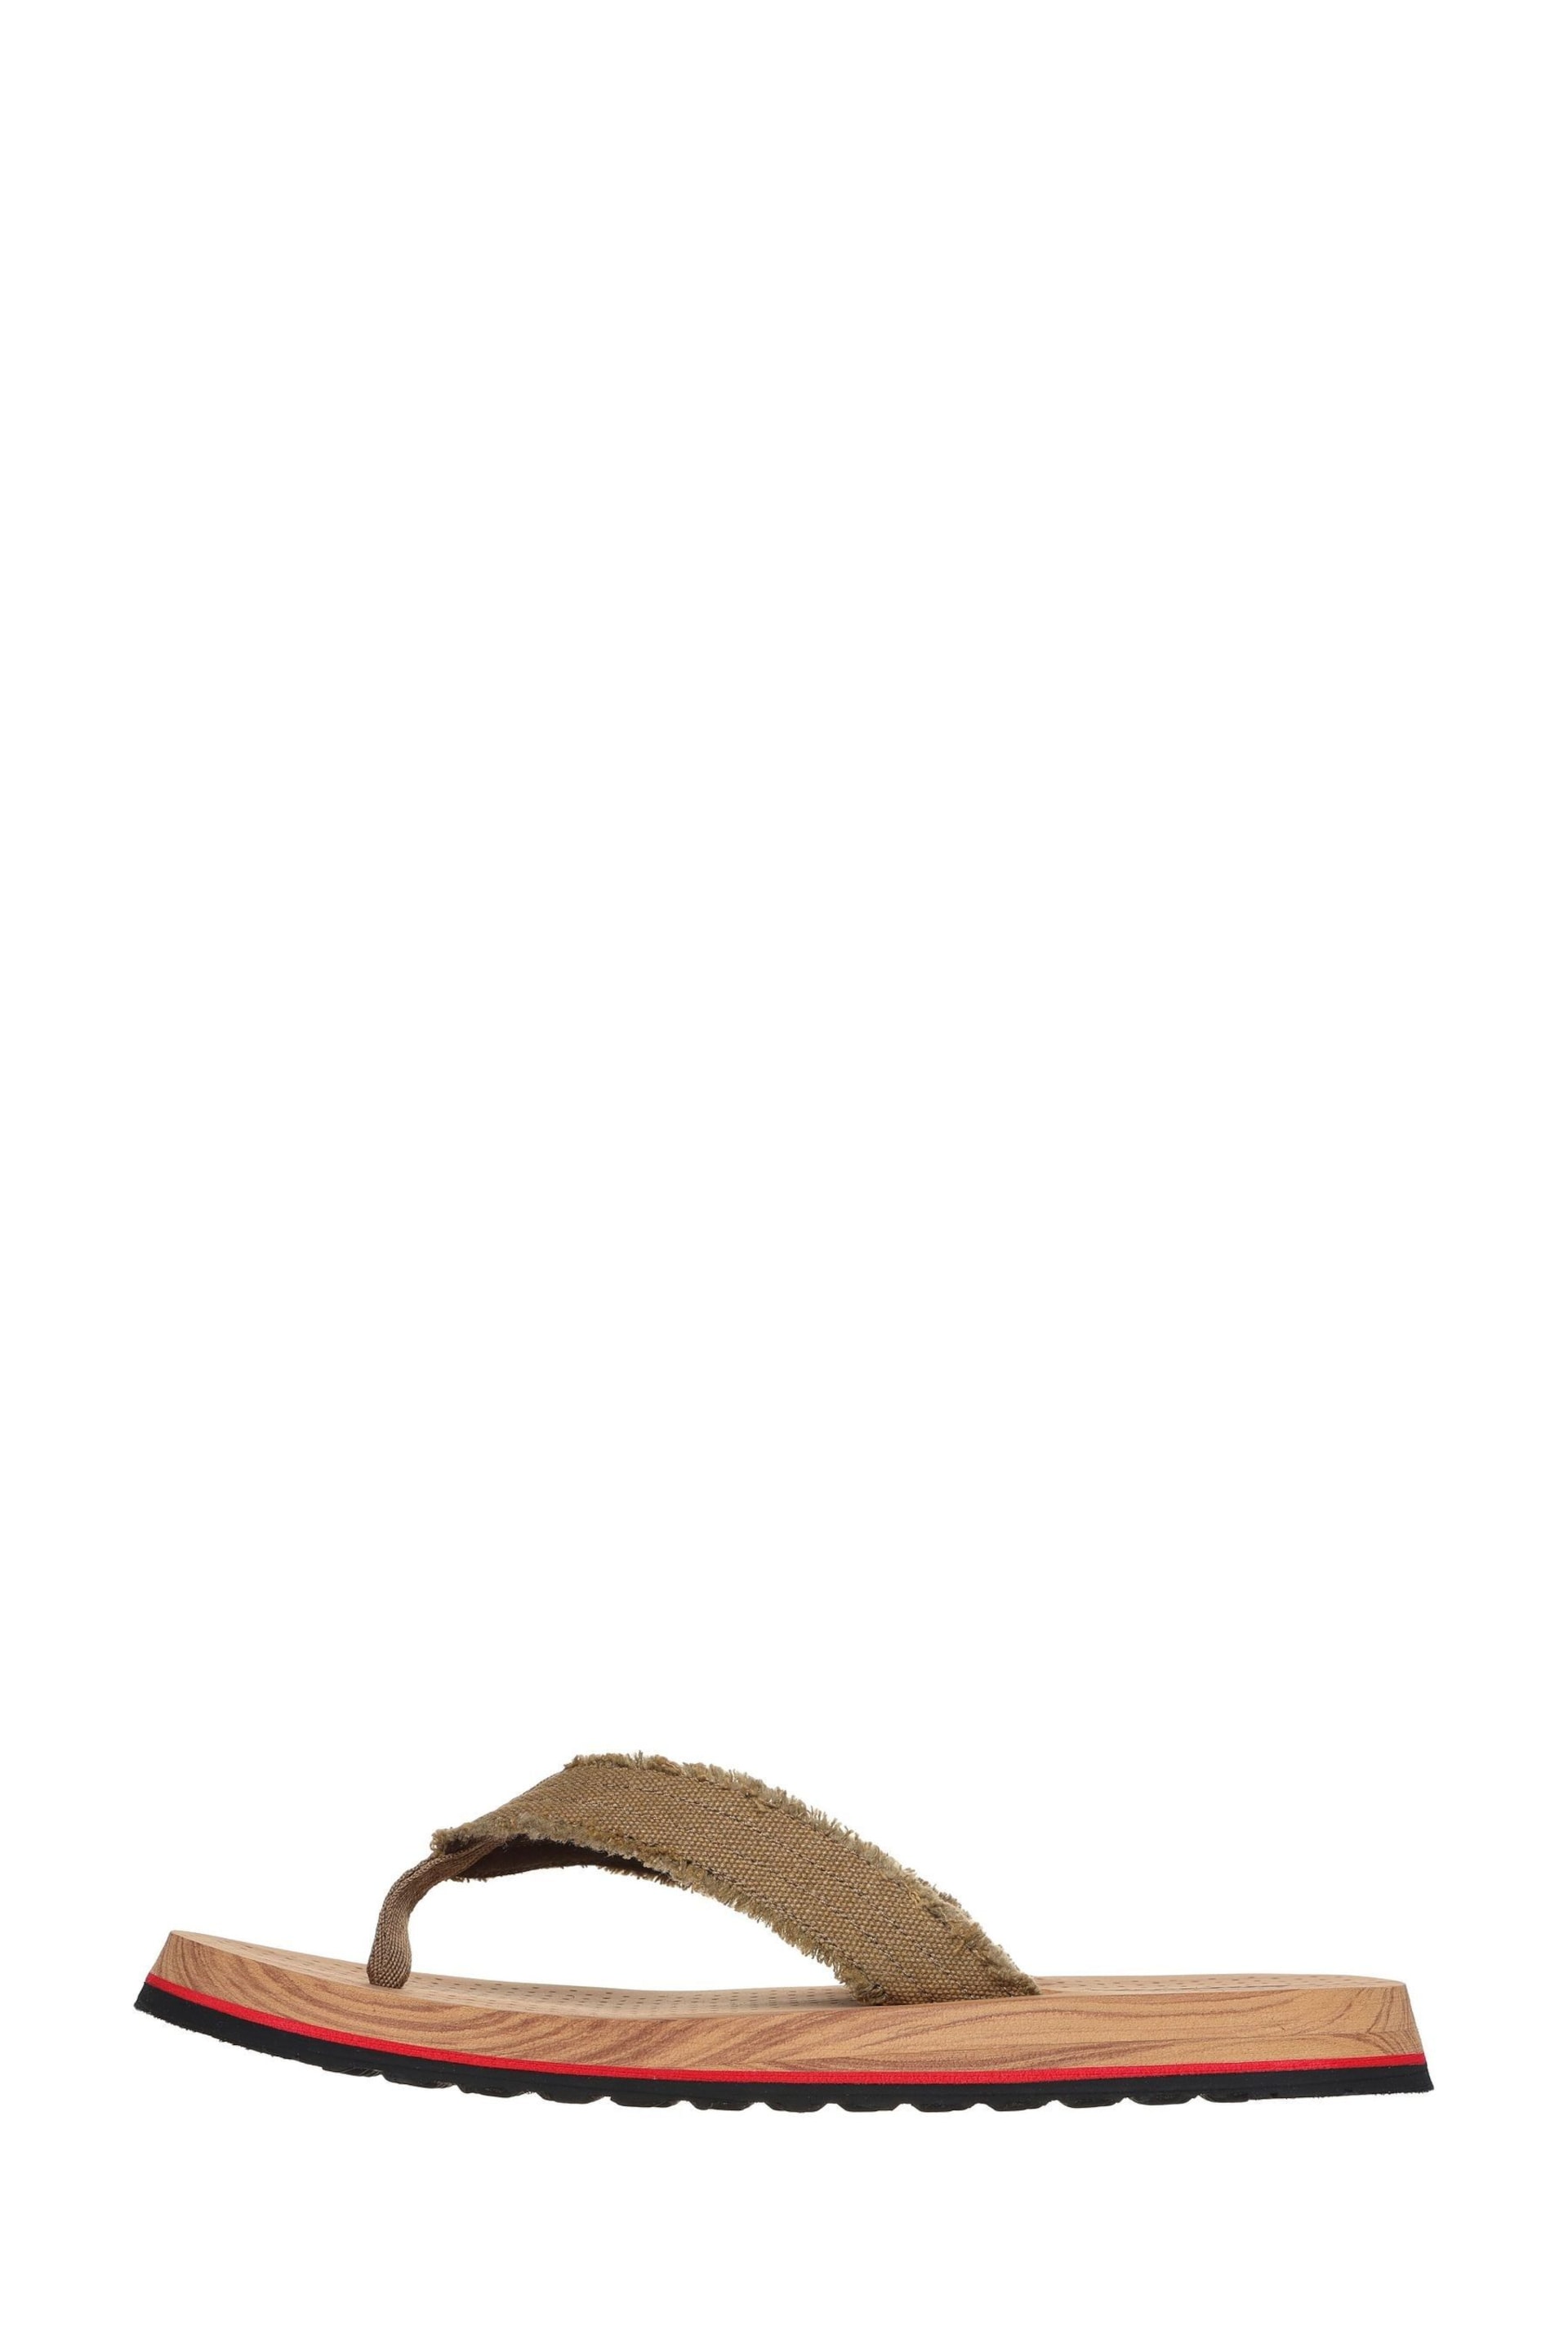 Skechers Natural Mens Sandals - Image 2 of 5